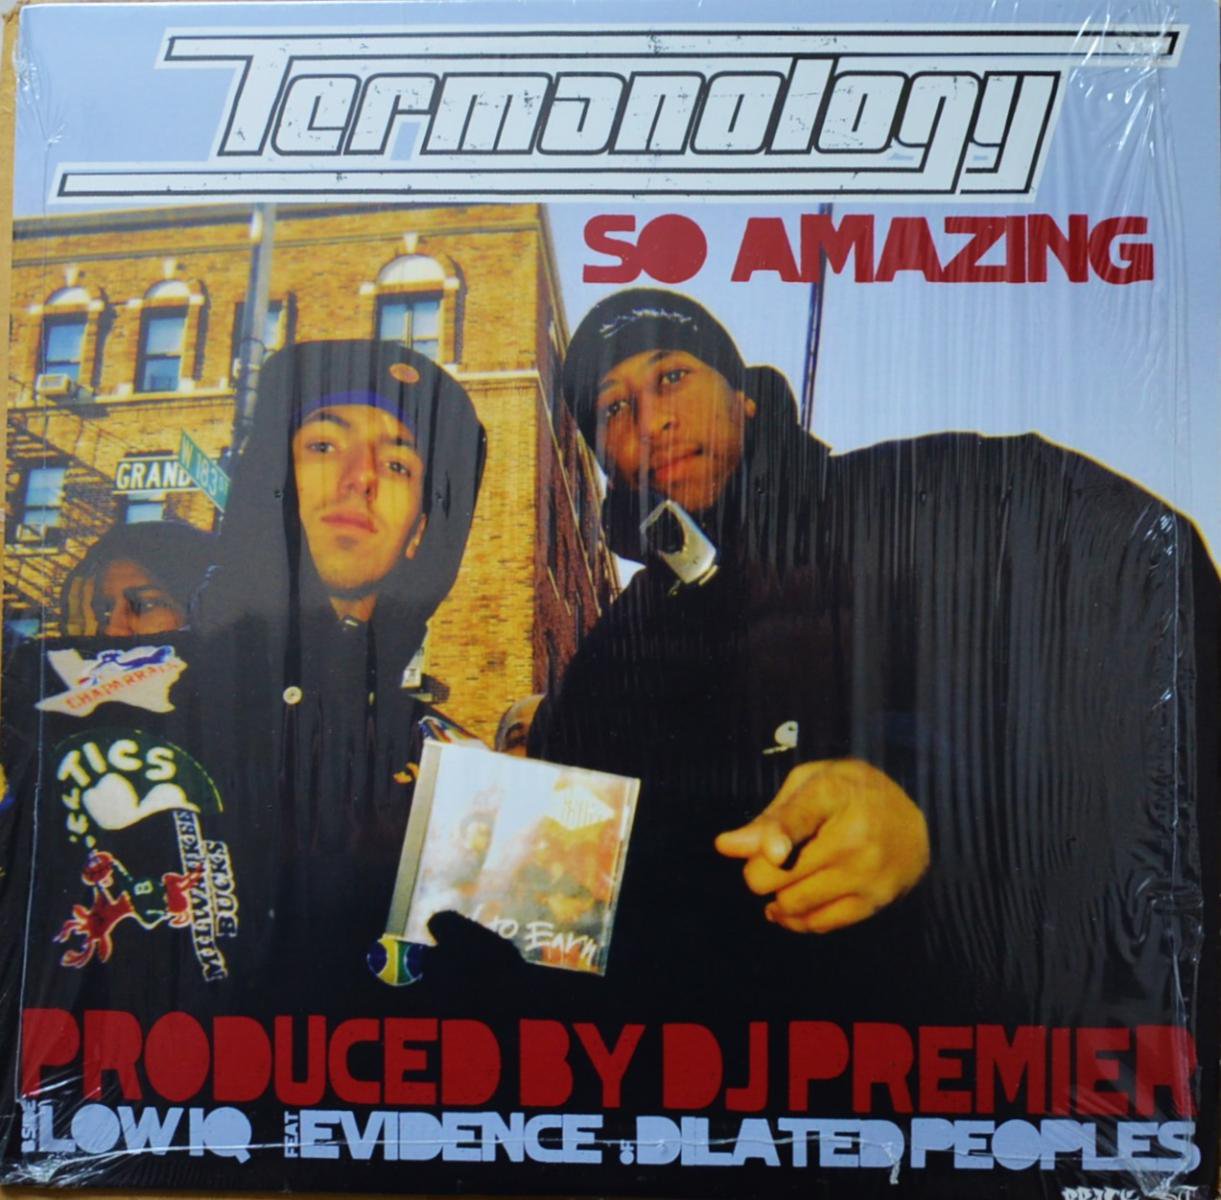 TERMANOLOGY / SO AMAZING (PROD BY.DJ PREMIER) / LOW IQ (PROD BY.EVIDENCE) (12